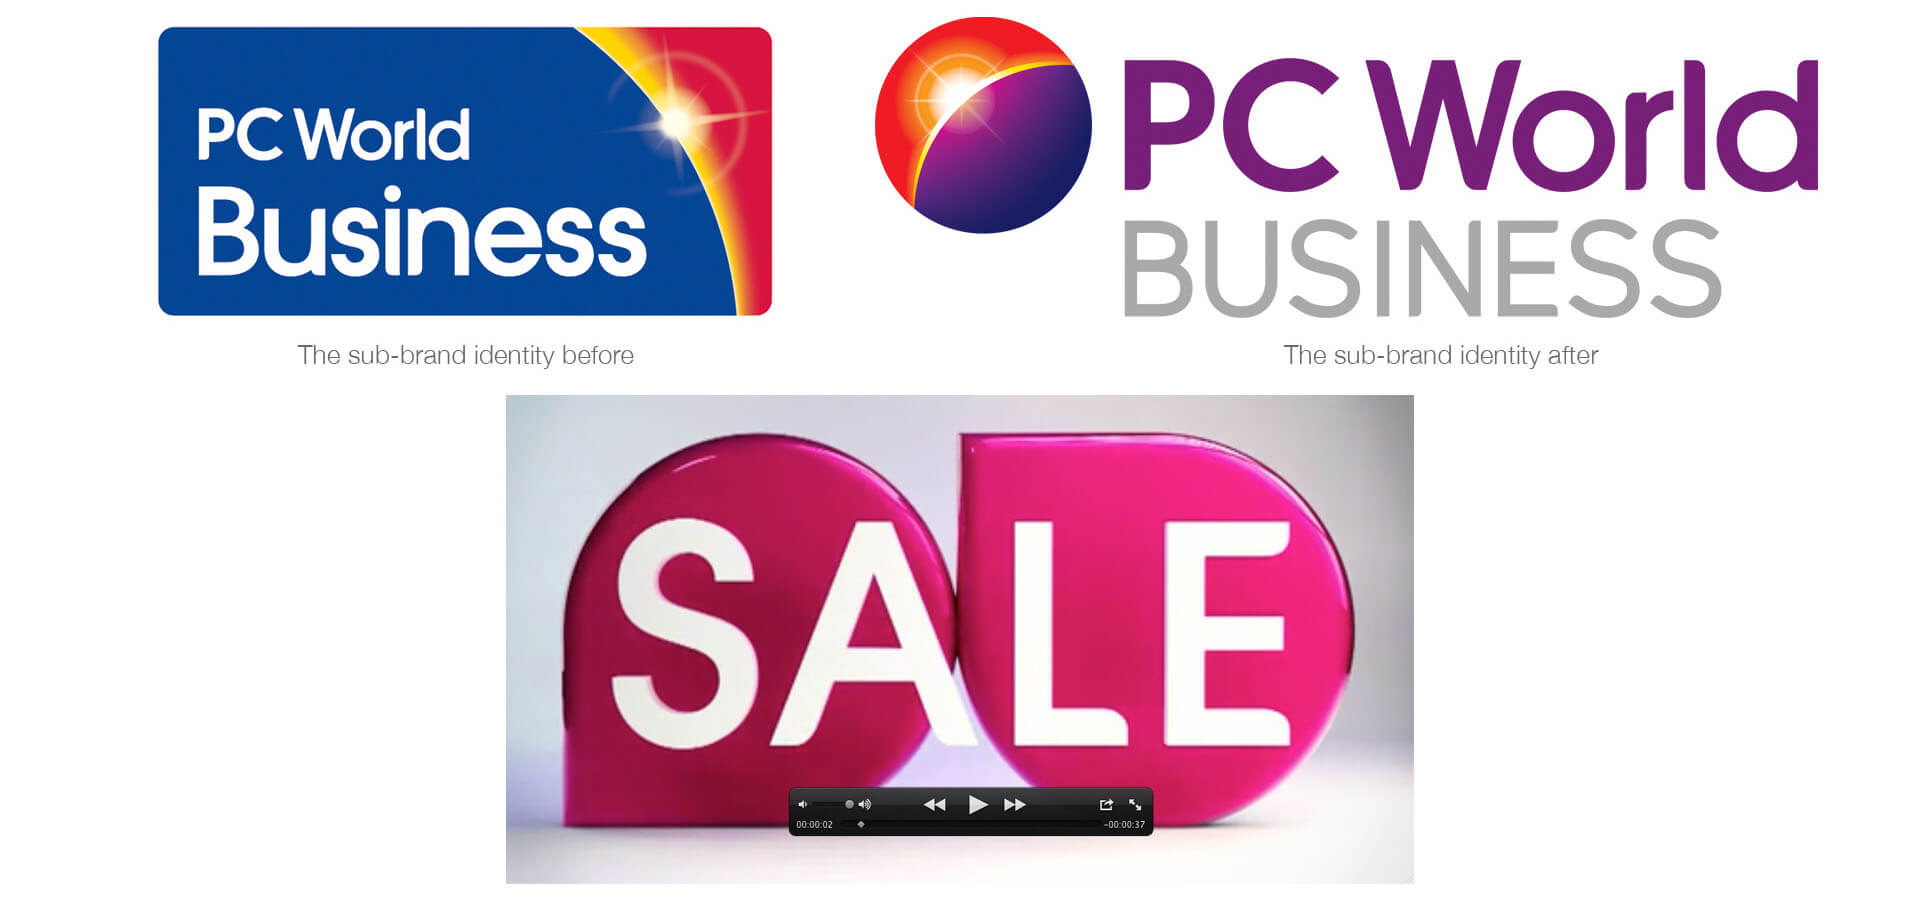 Currys PC World corporate sub-brand identity PC World Business